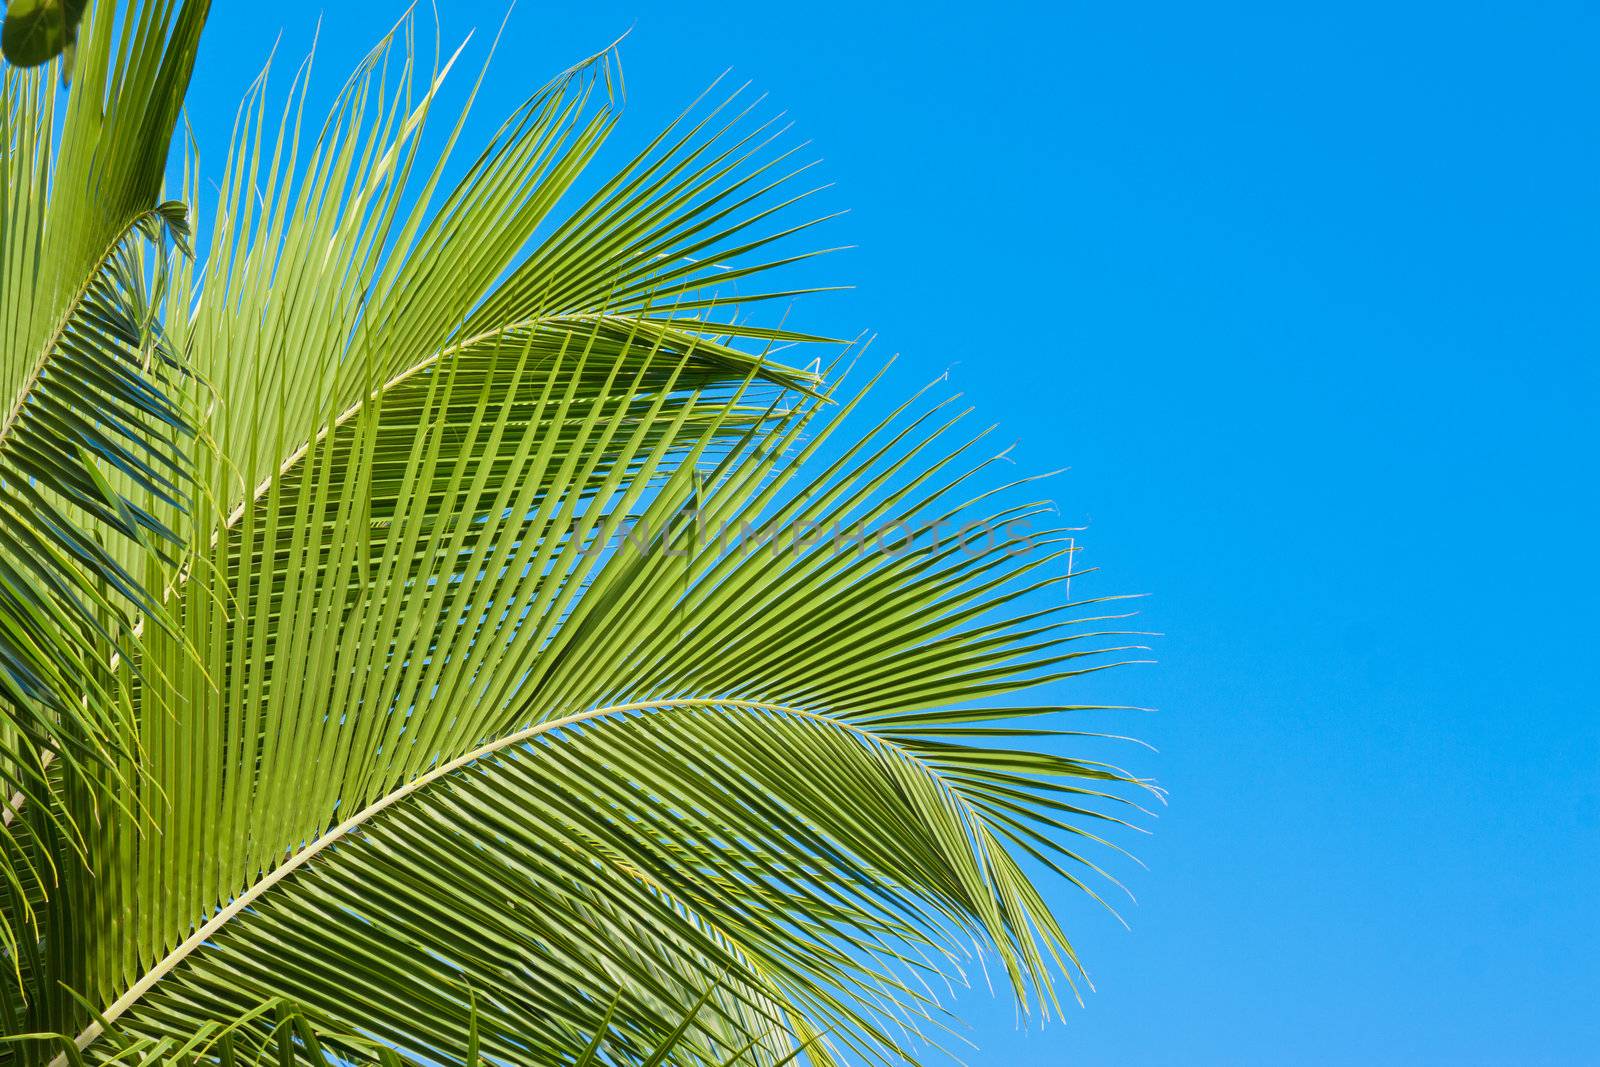 Palm tree fronds by Jaykayl